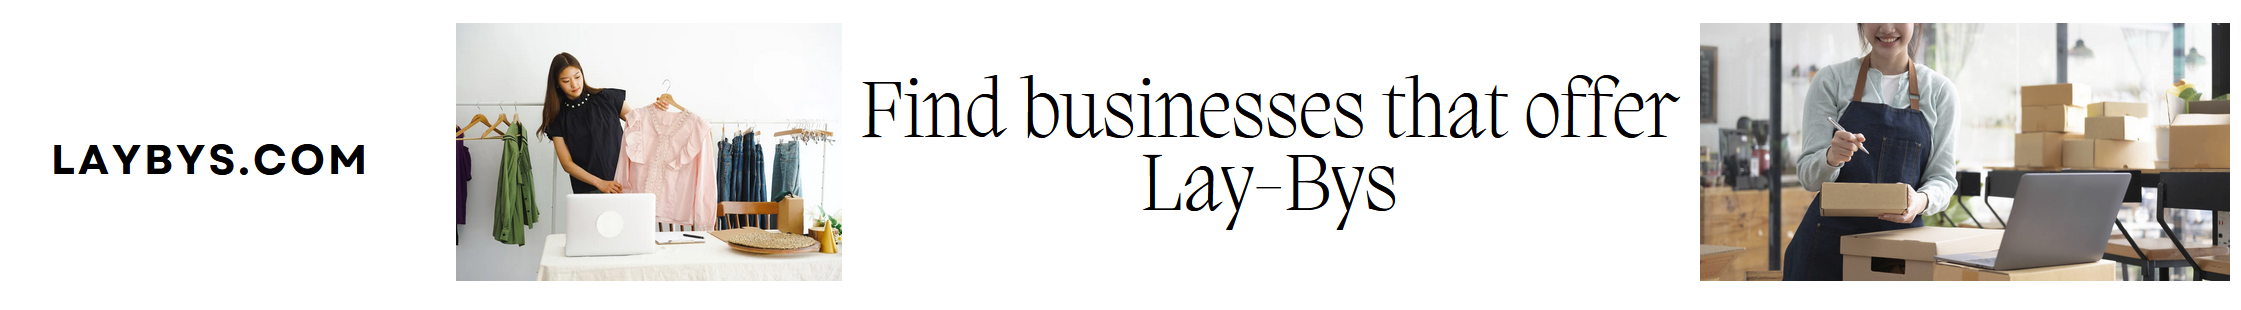 LayBys.com